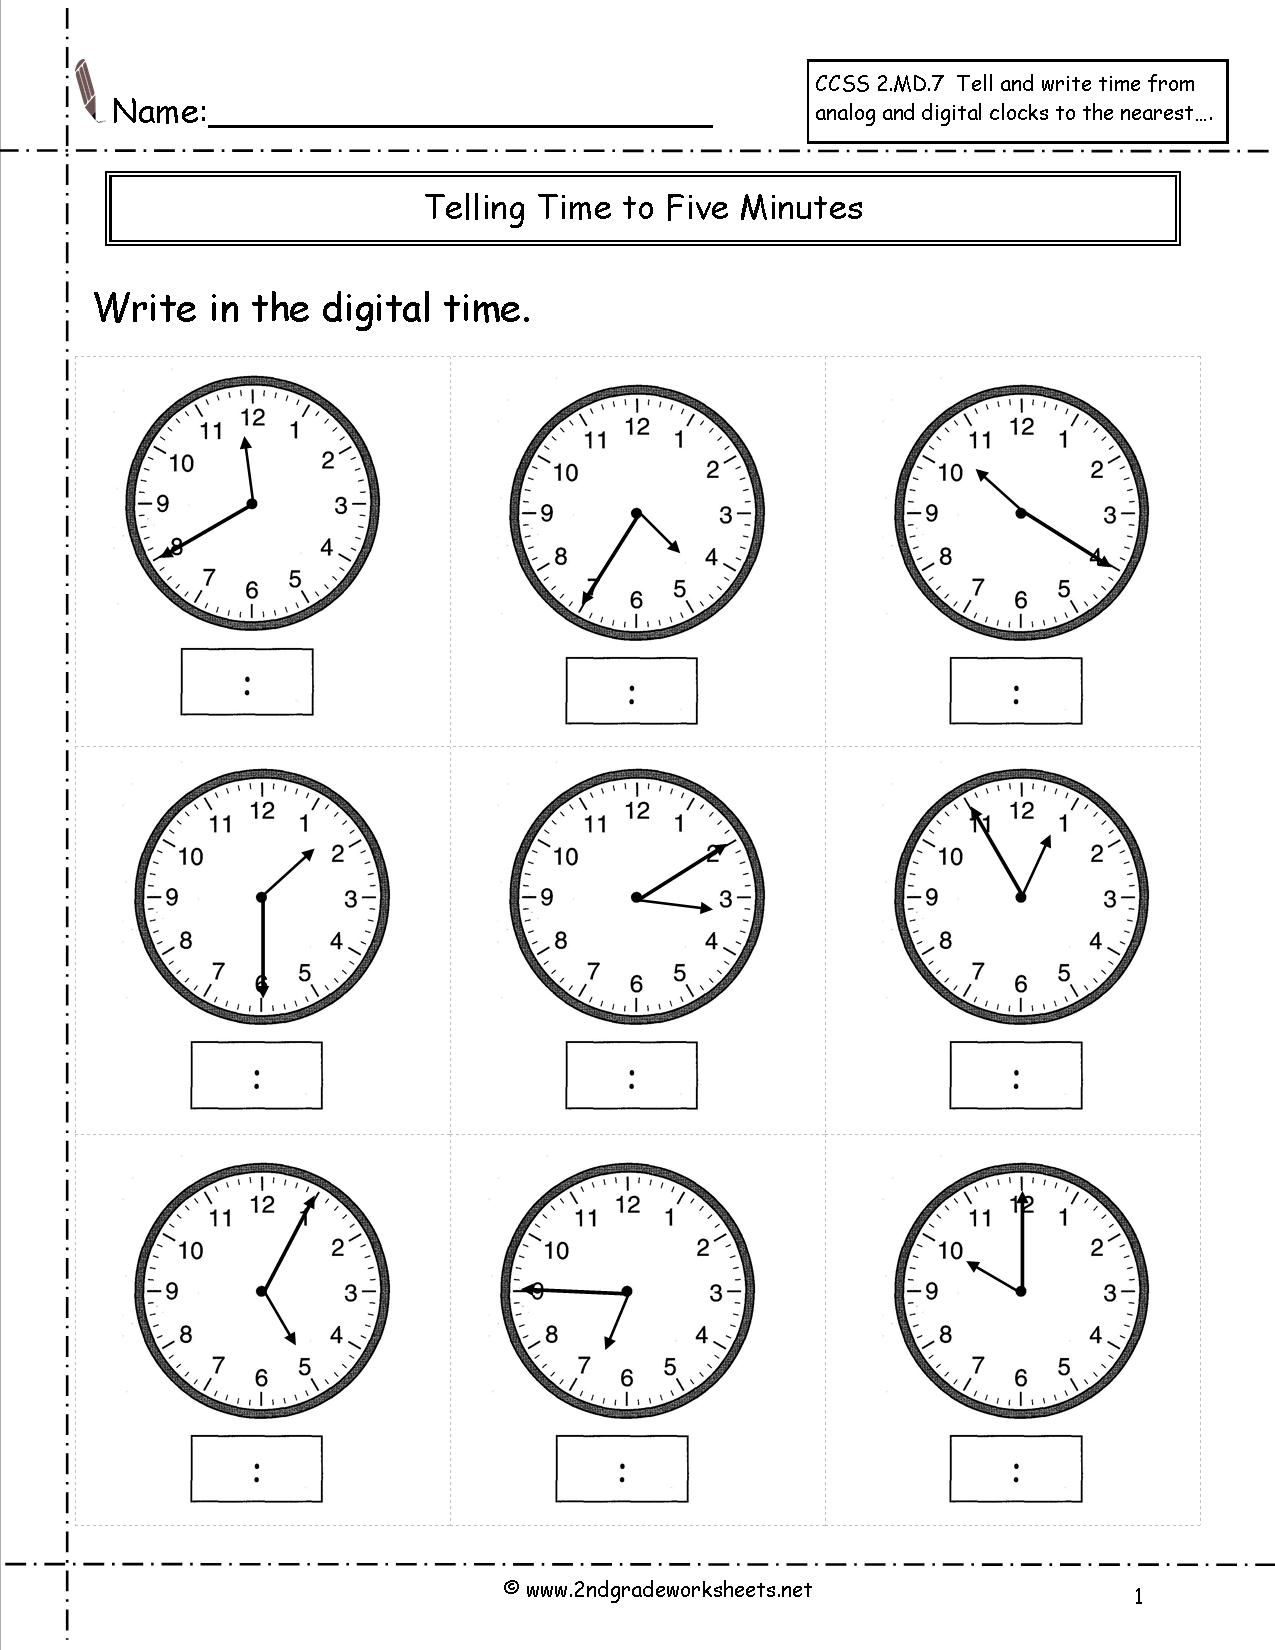 Telling Time Nearest Minute Worksheet Image